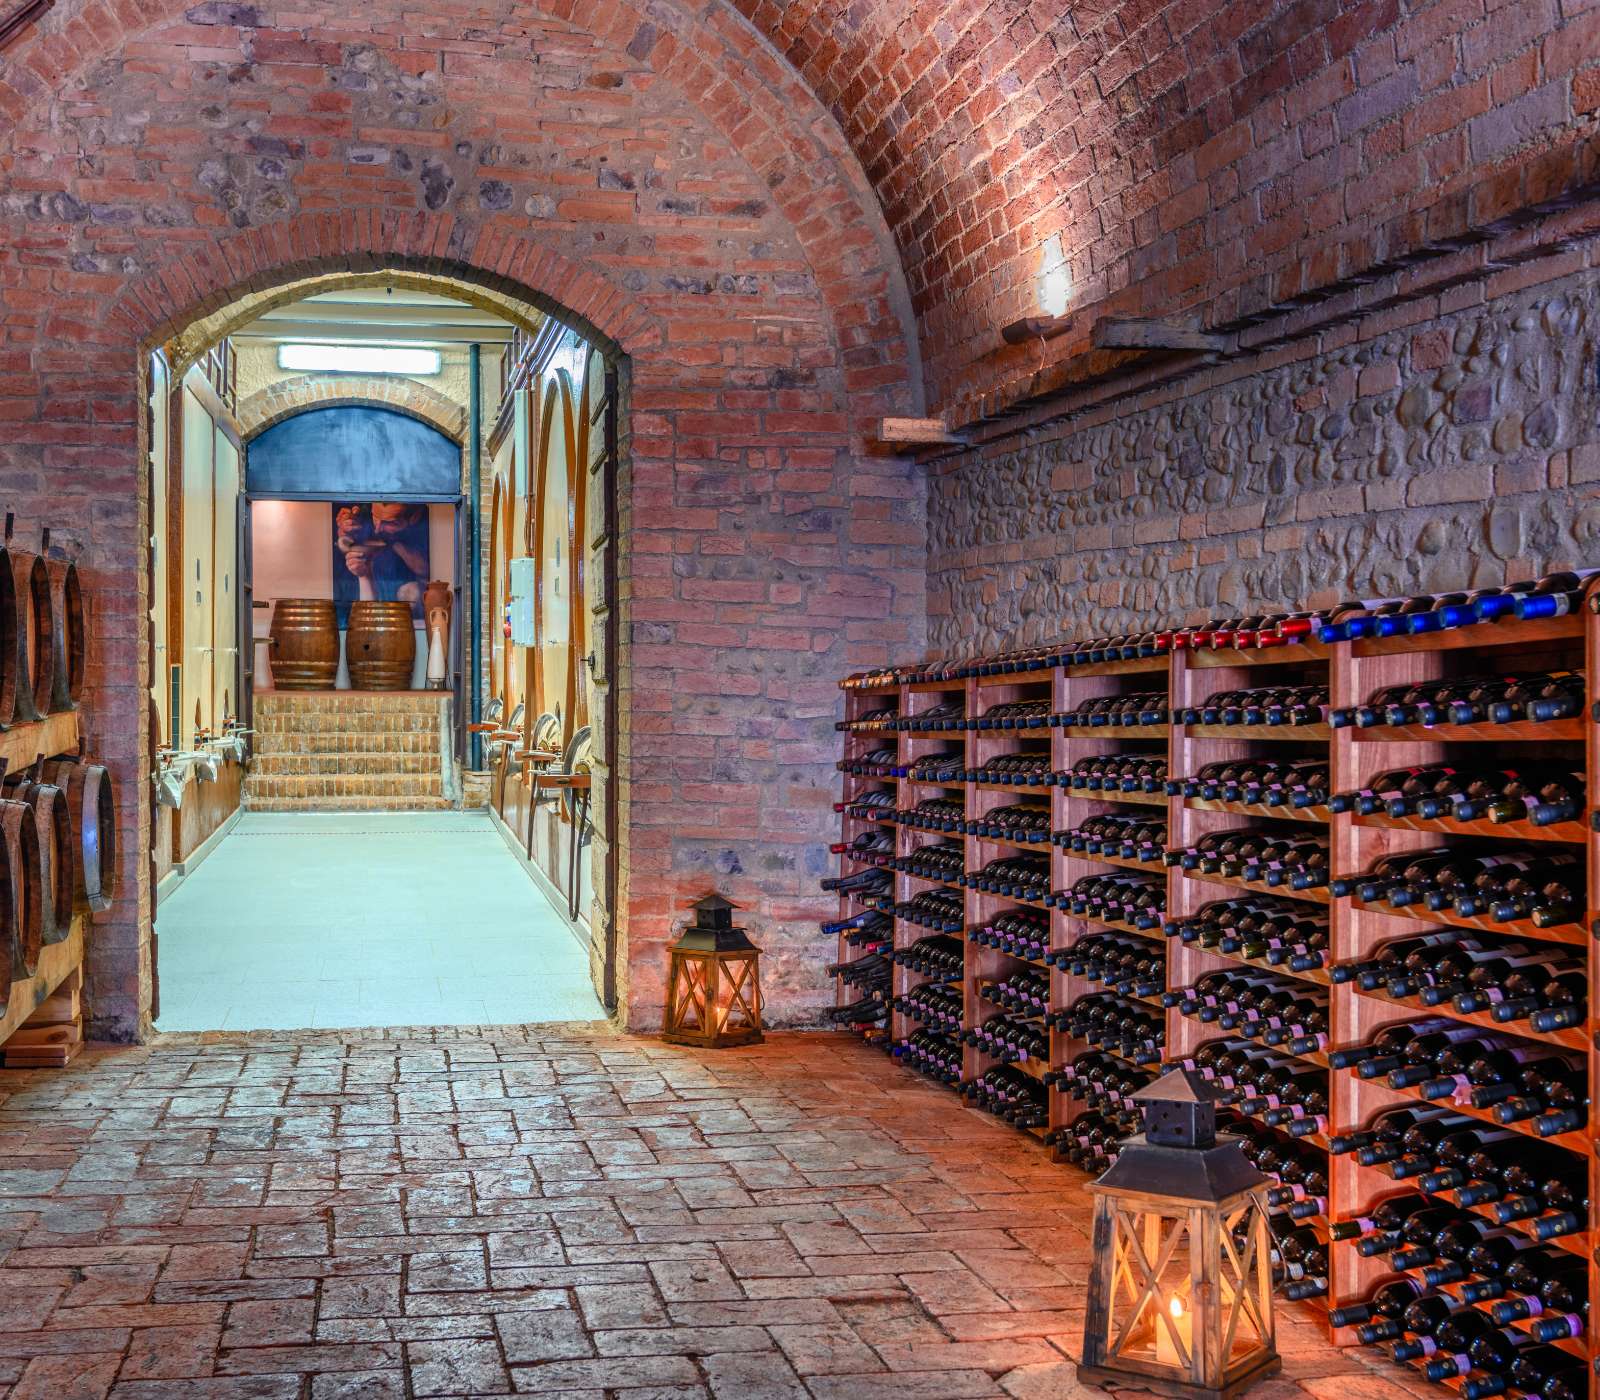                 cellar in Chianti
                 - img 2